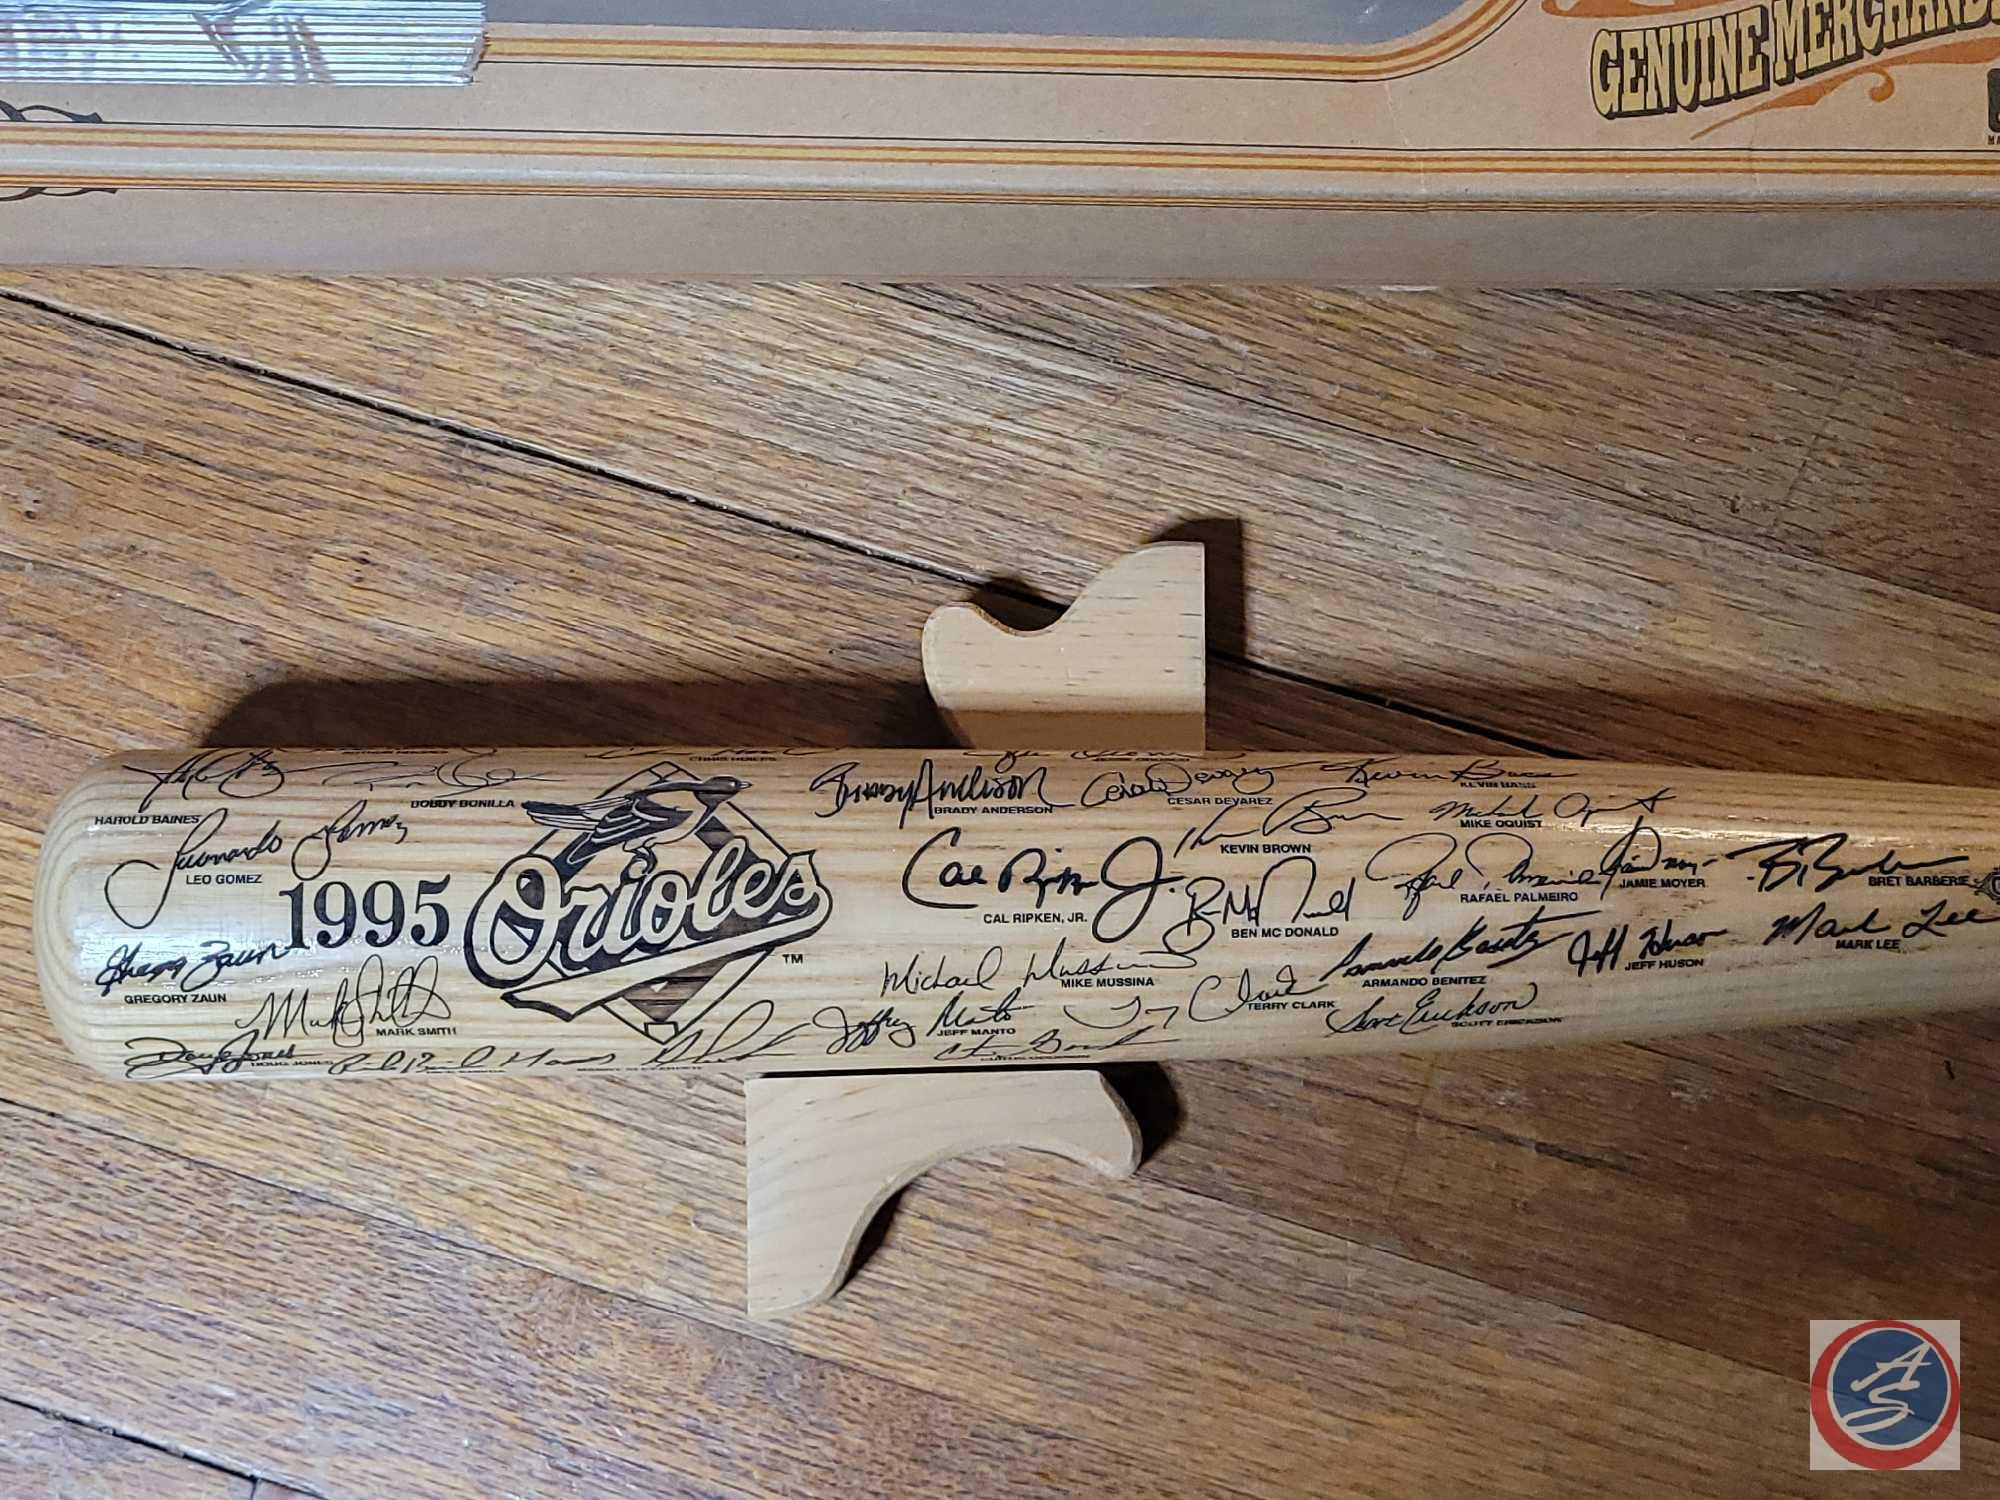 Heavy Hitter Carved Baseball Bat. 1995 Orioles championship signature baseball bat.